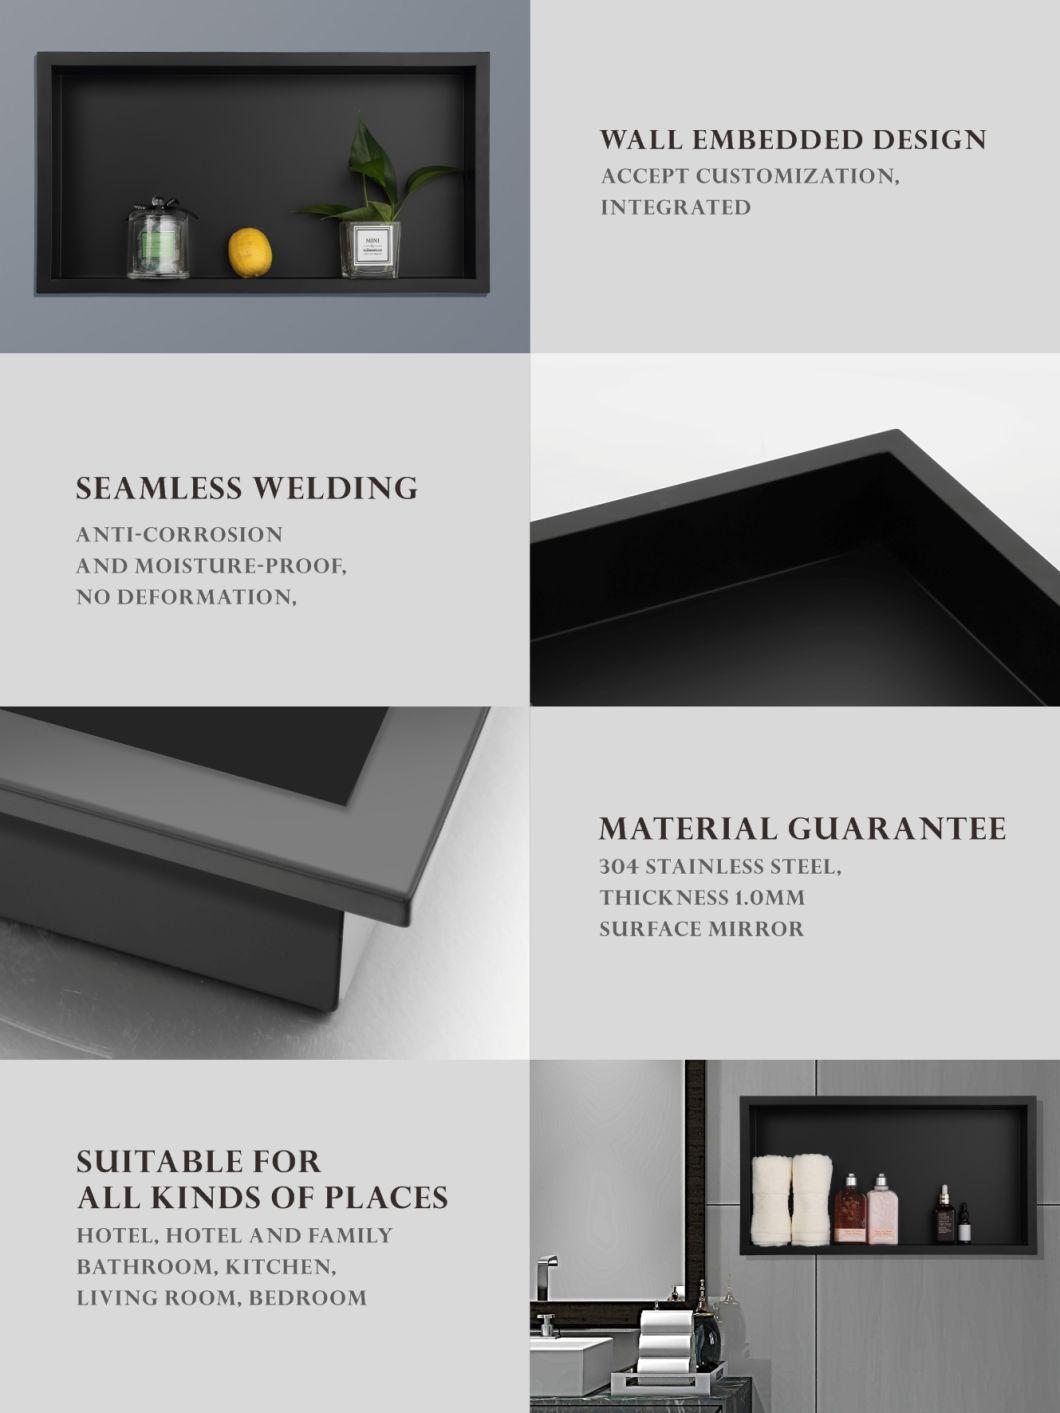 Decorative Panel Sheet Metal Black Stainless Steel Shower Niche Single Shower Shelf Insert for Bathroom Niche